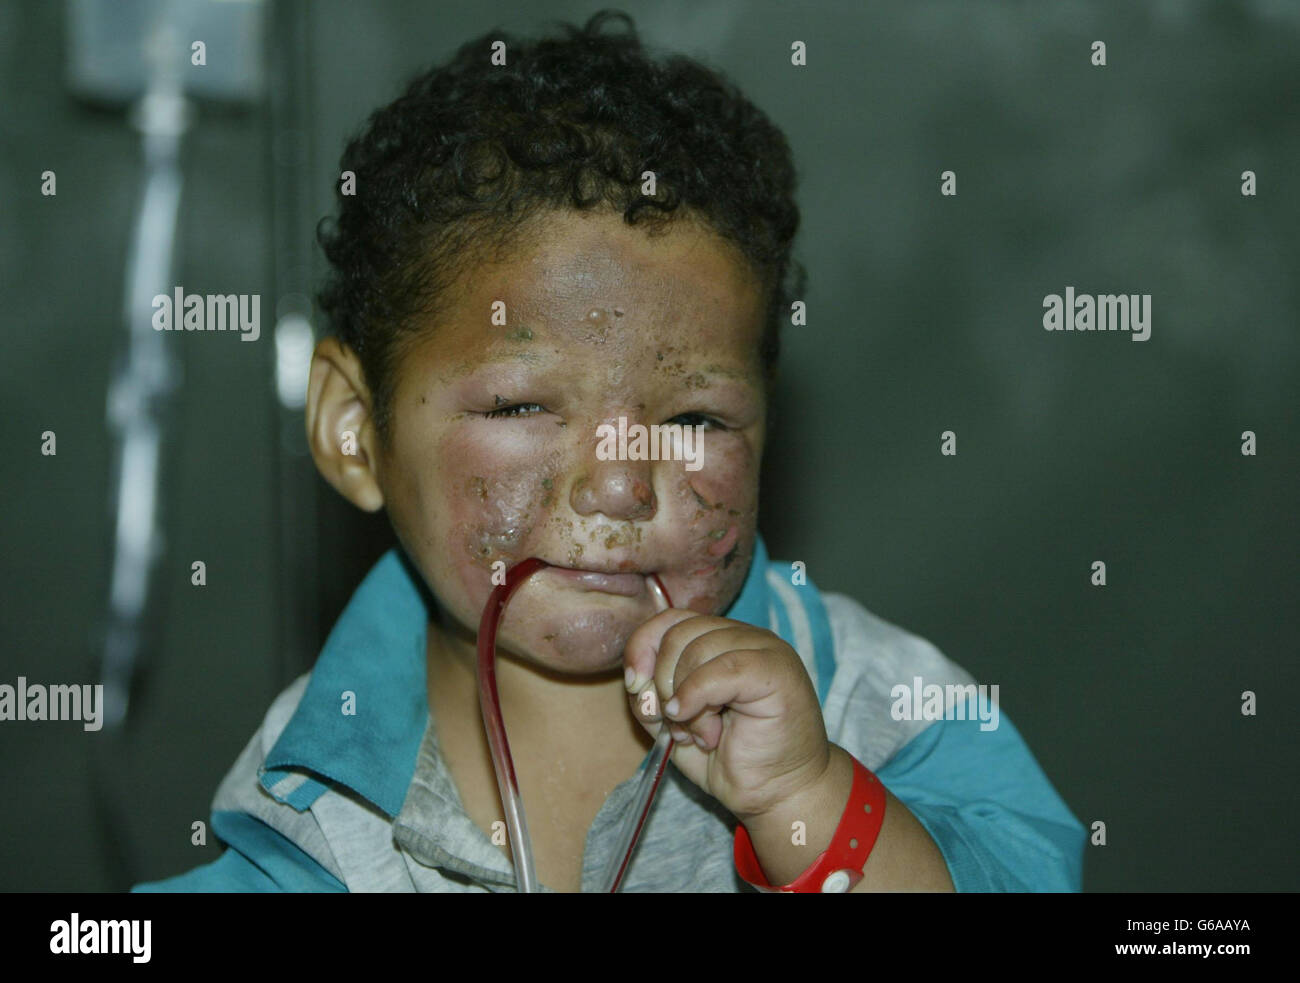 Un niño iraquí herido, Abbas, de 2 años, en un hostial de campo cerca de Basra, Irak. Pa Photo/Guardian/Dan Chung/mod POOL. Foto de stock